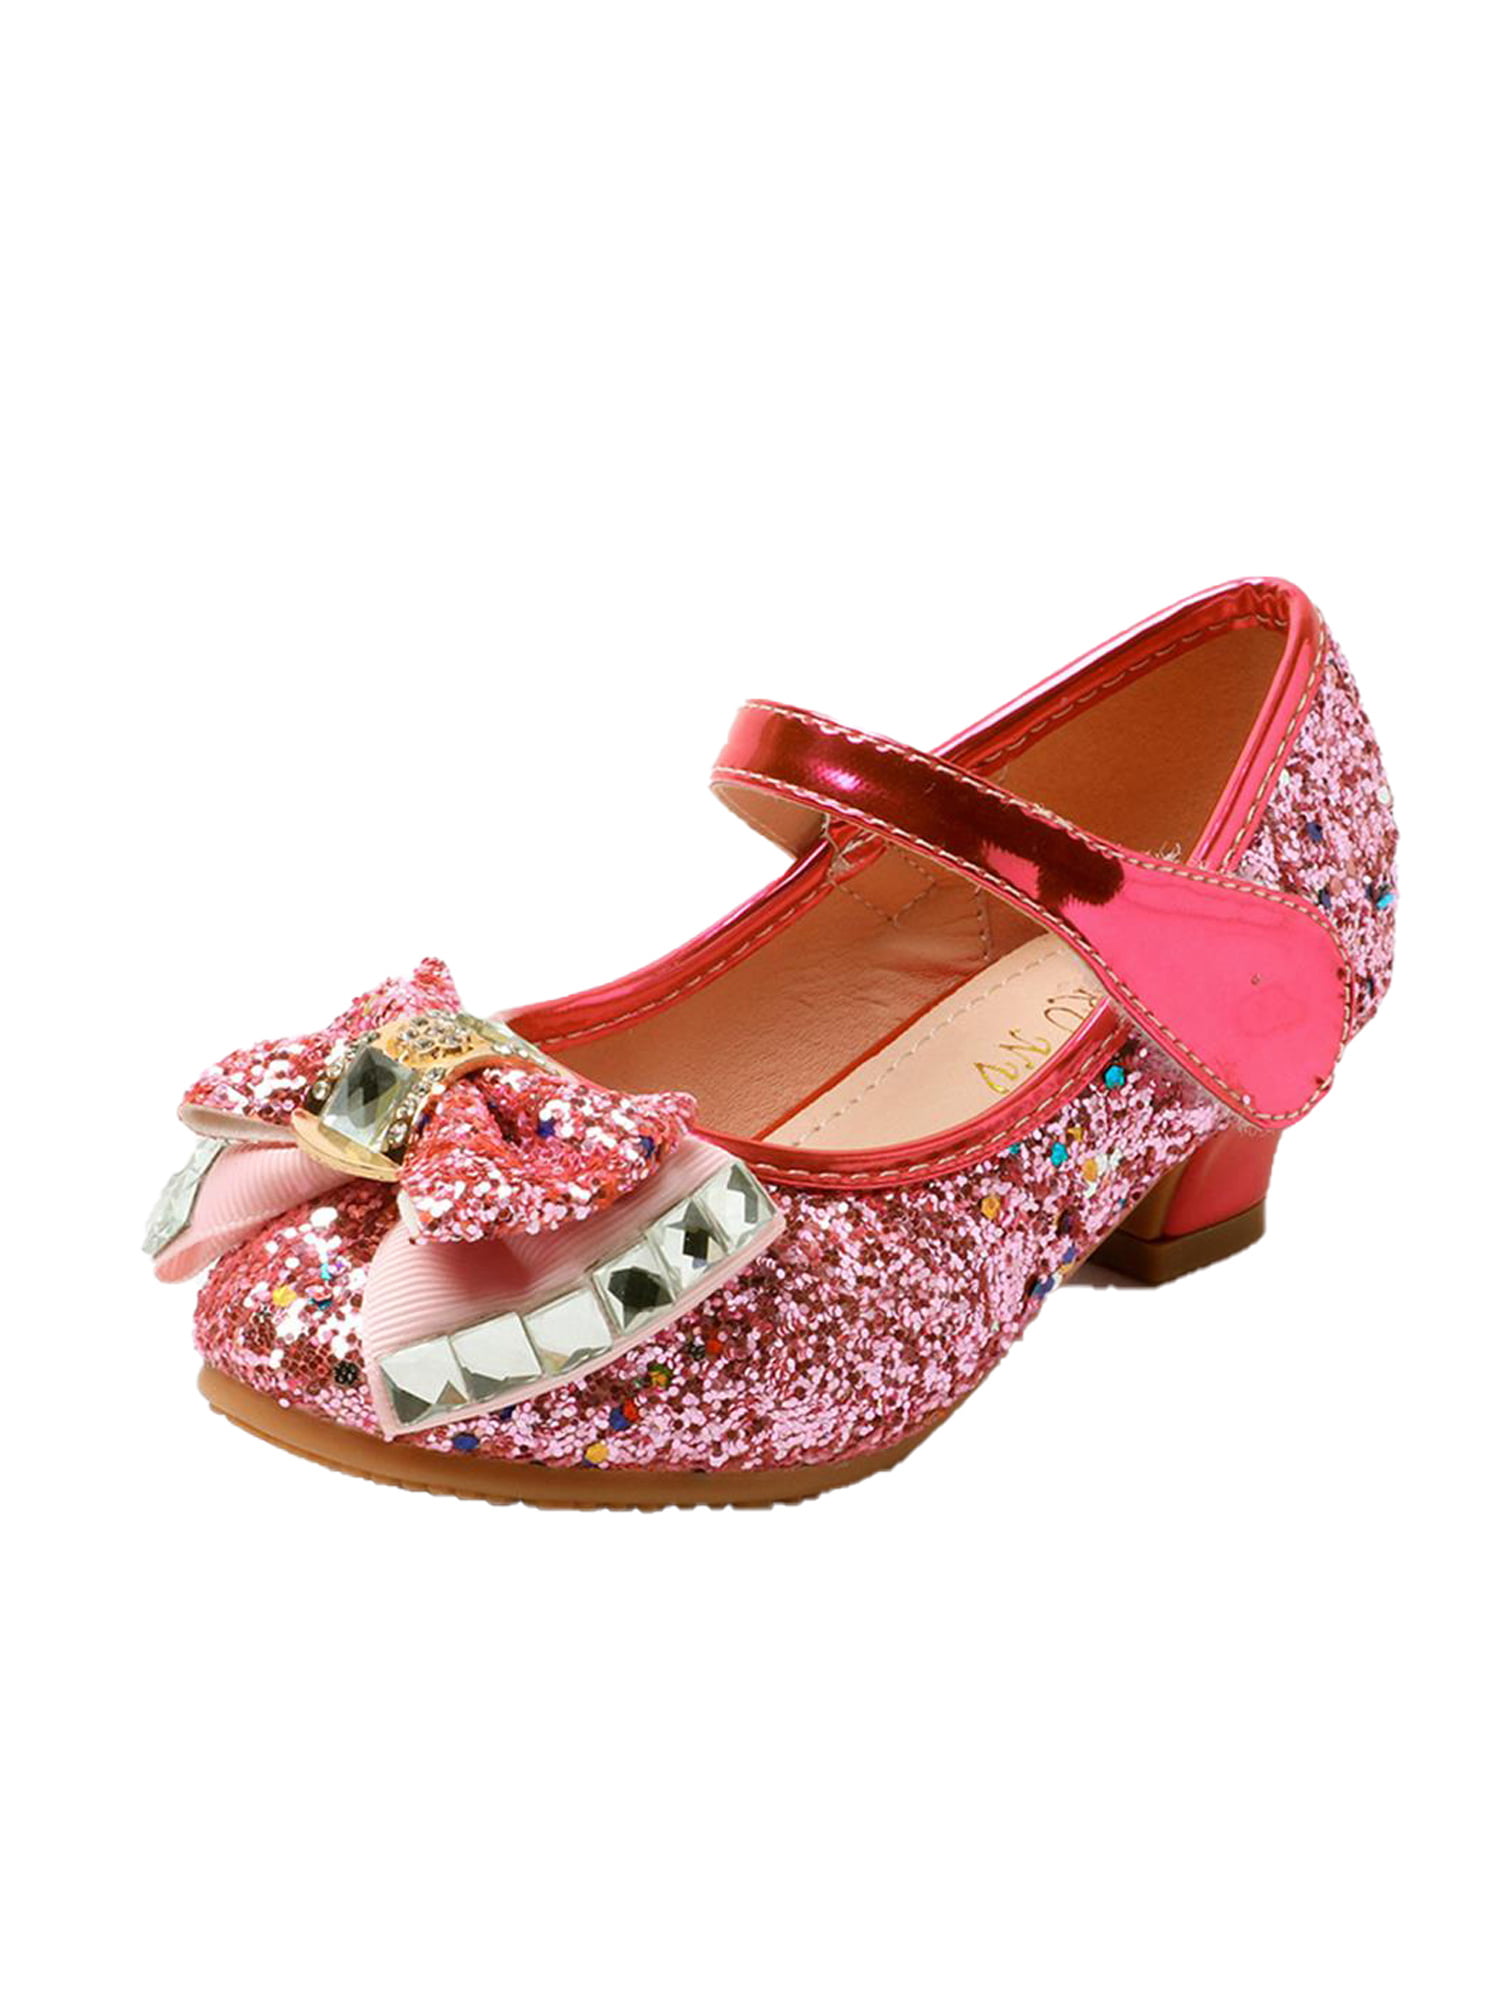 Toddler Girls Kids Glitter Sequins Party Wedding Sandals Princess Shoes Size 